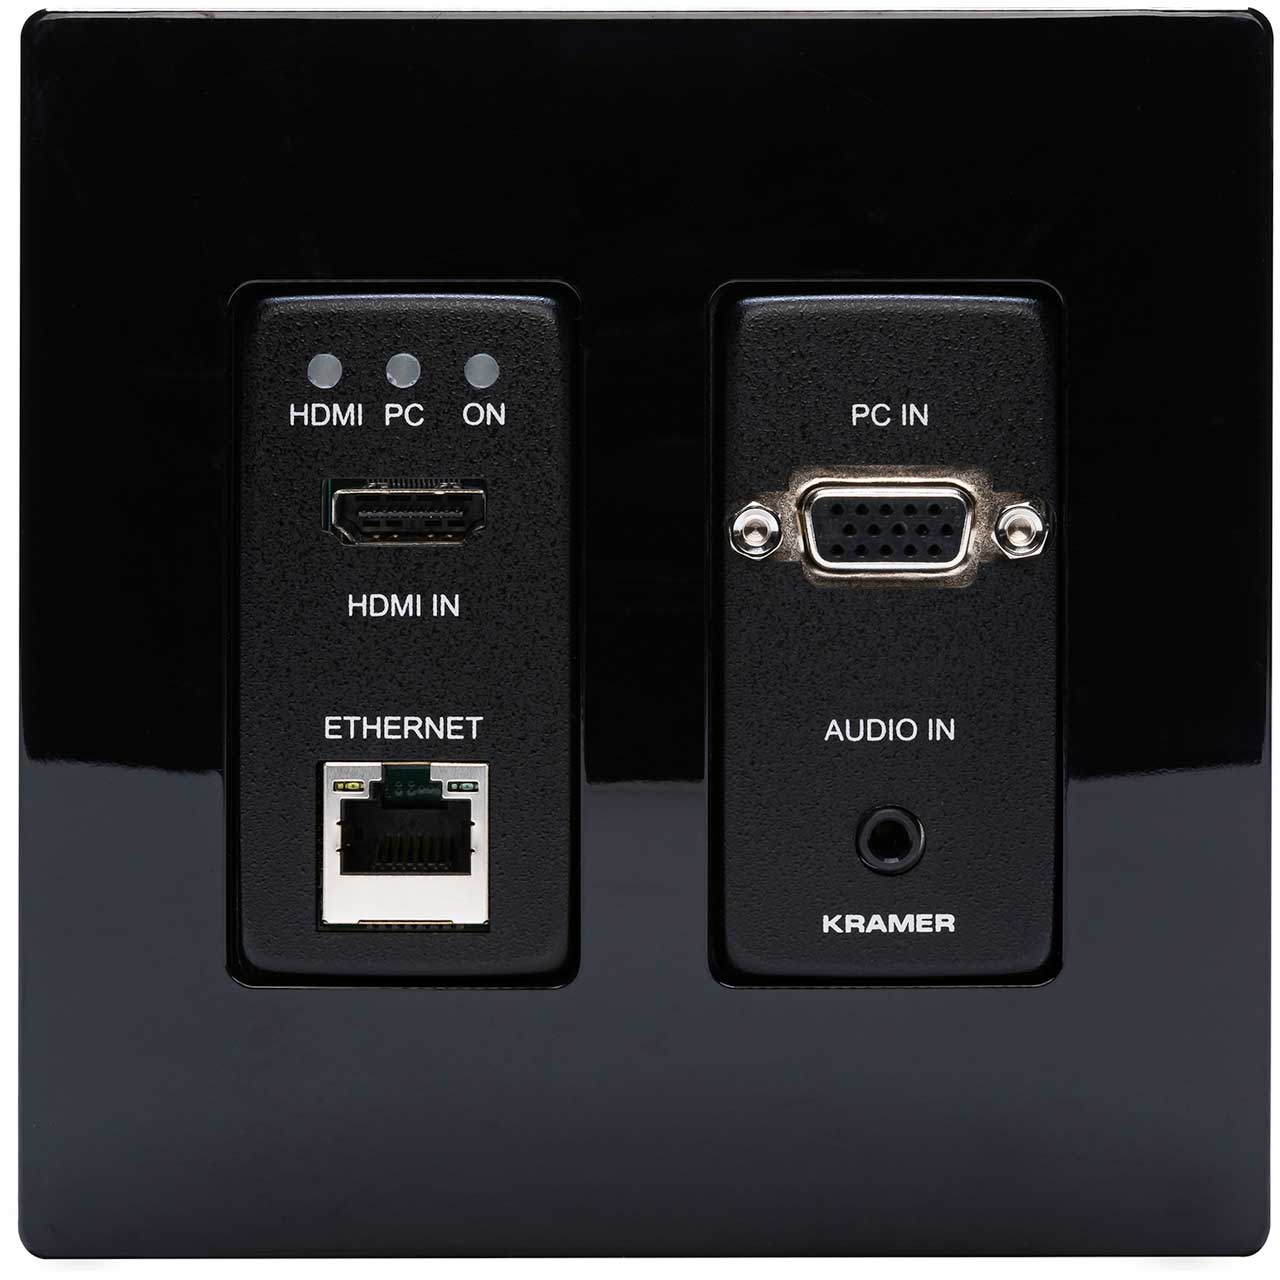 USB-C/HDMI Wall Plate Transmitter via HDBaseT – AVPro Edge